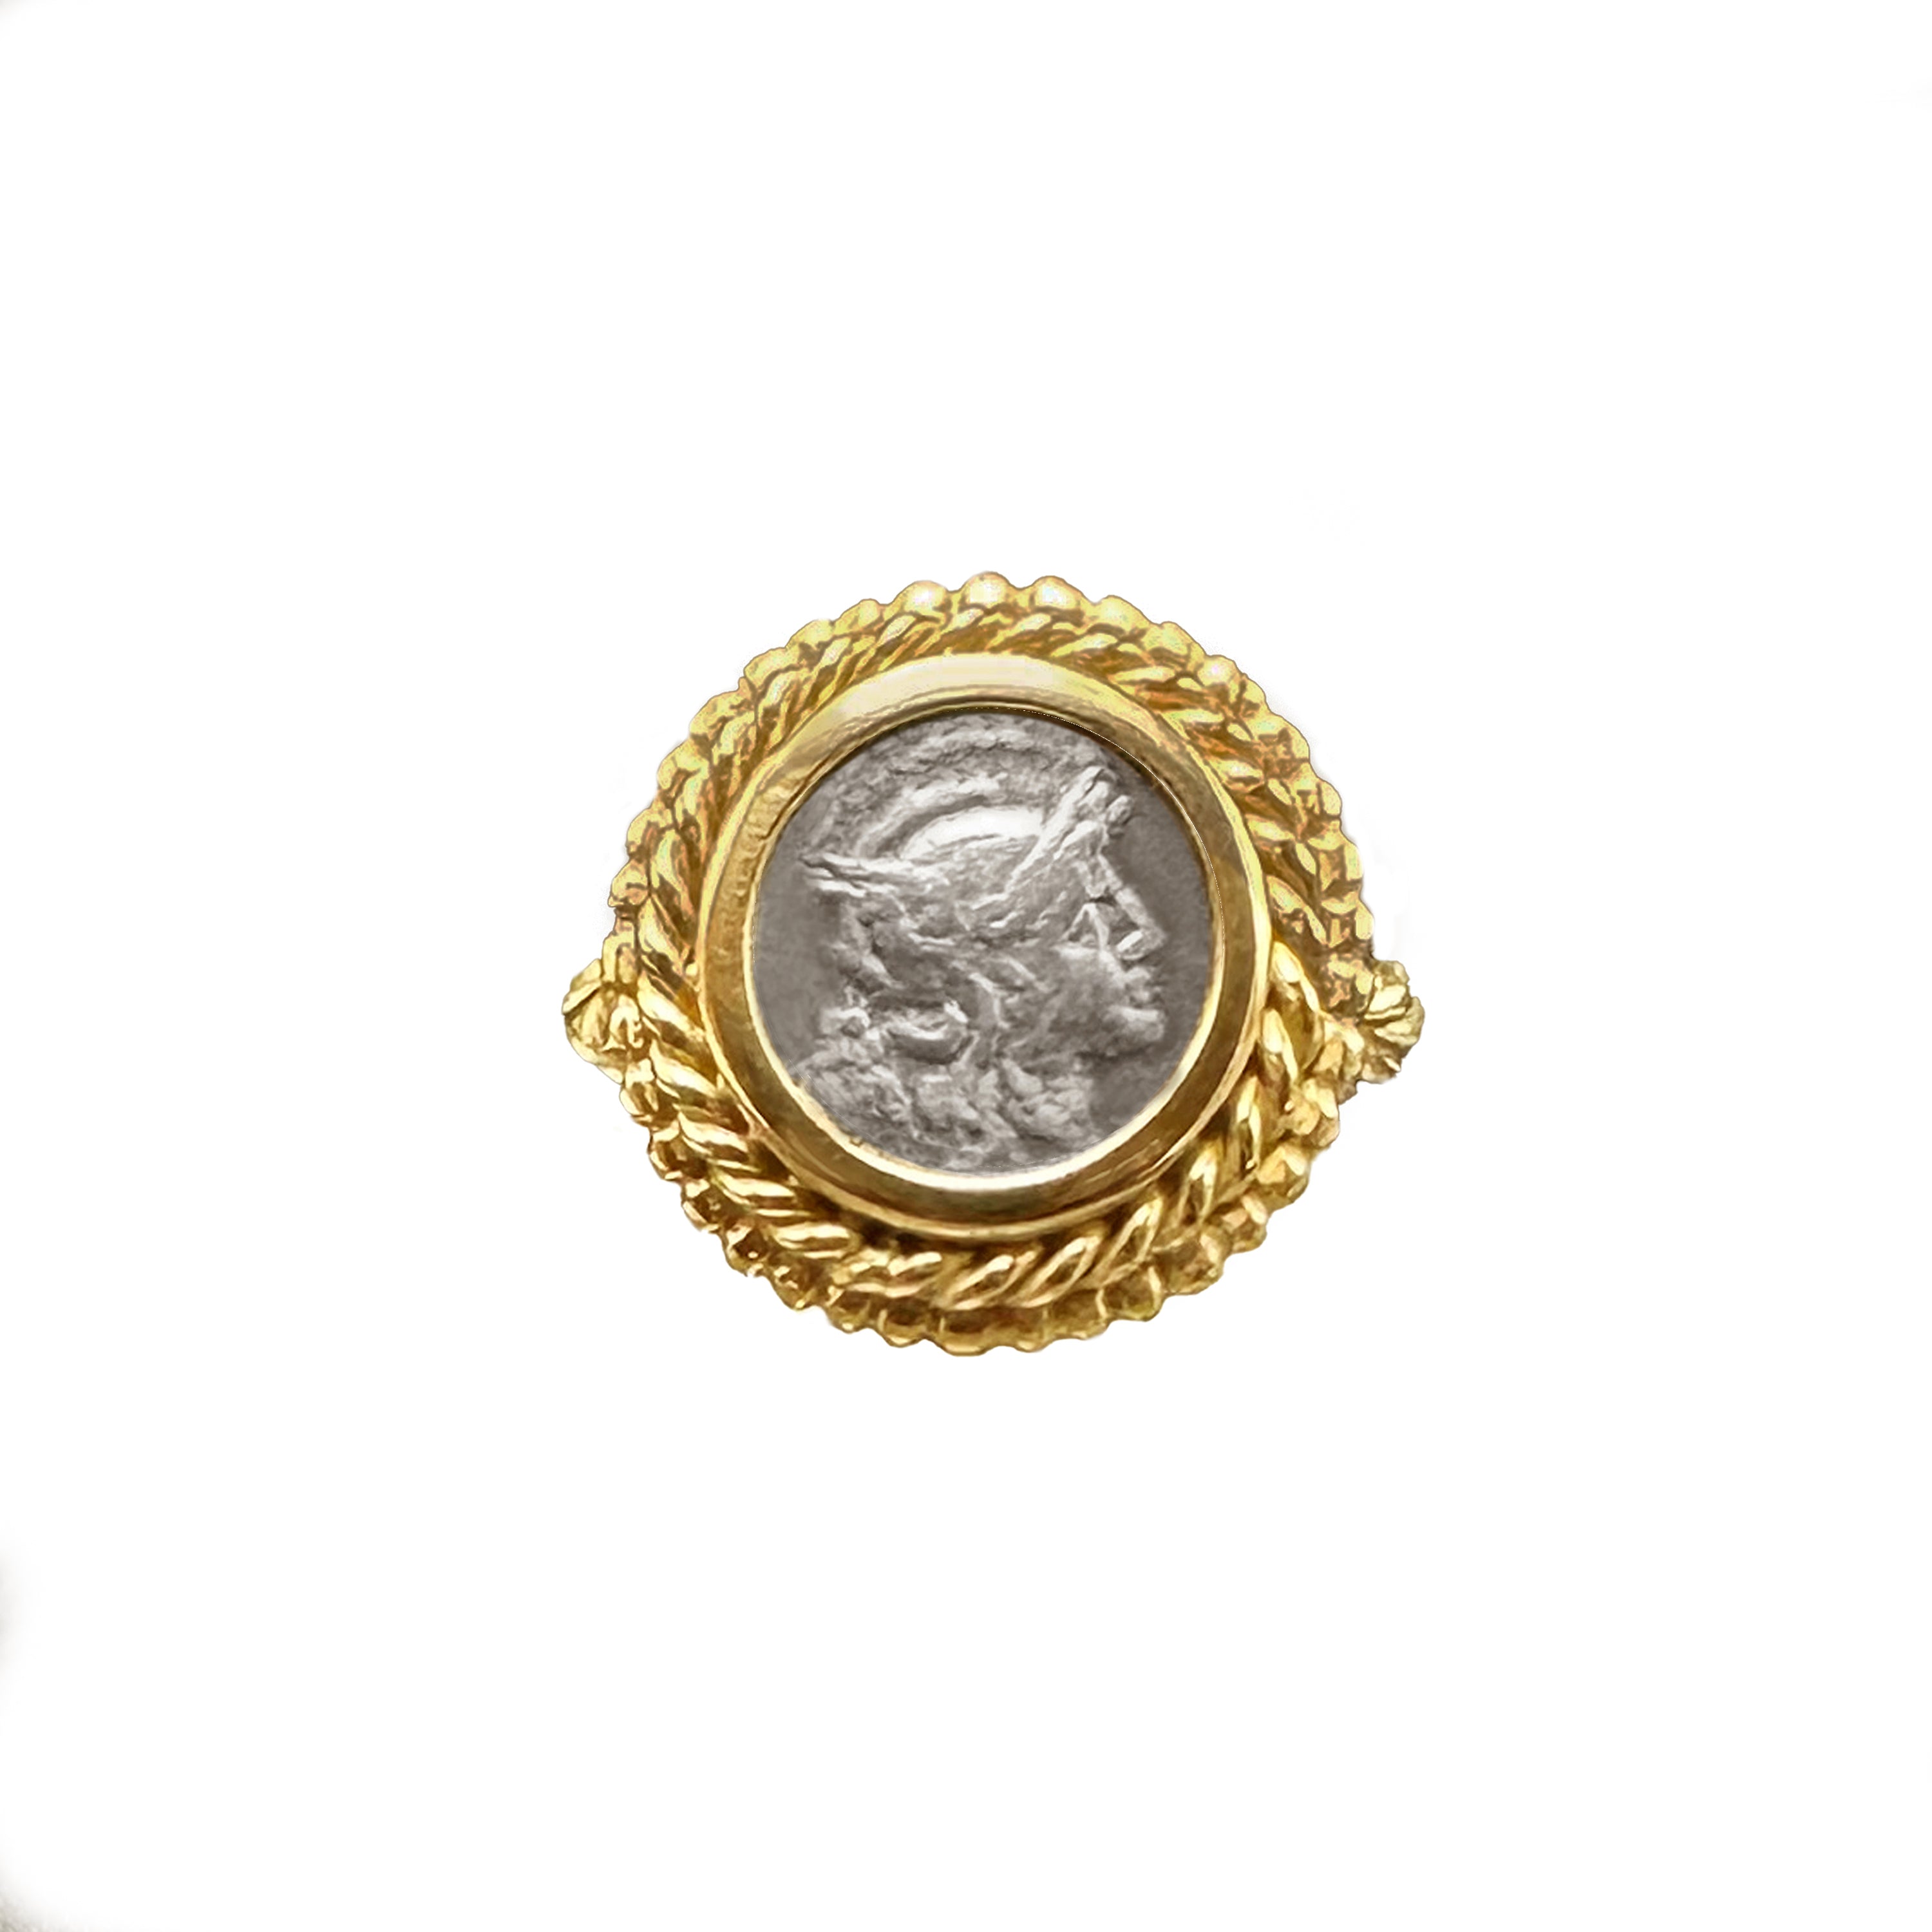 GUINEA 10 GRAM GOLD COIN - Guinea - The Hallmark Jewellers